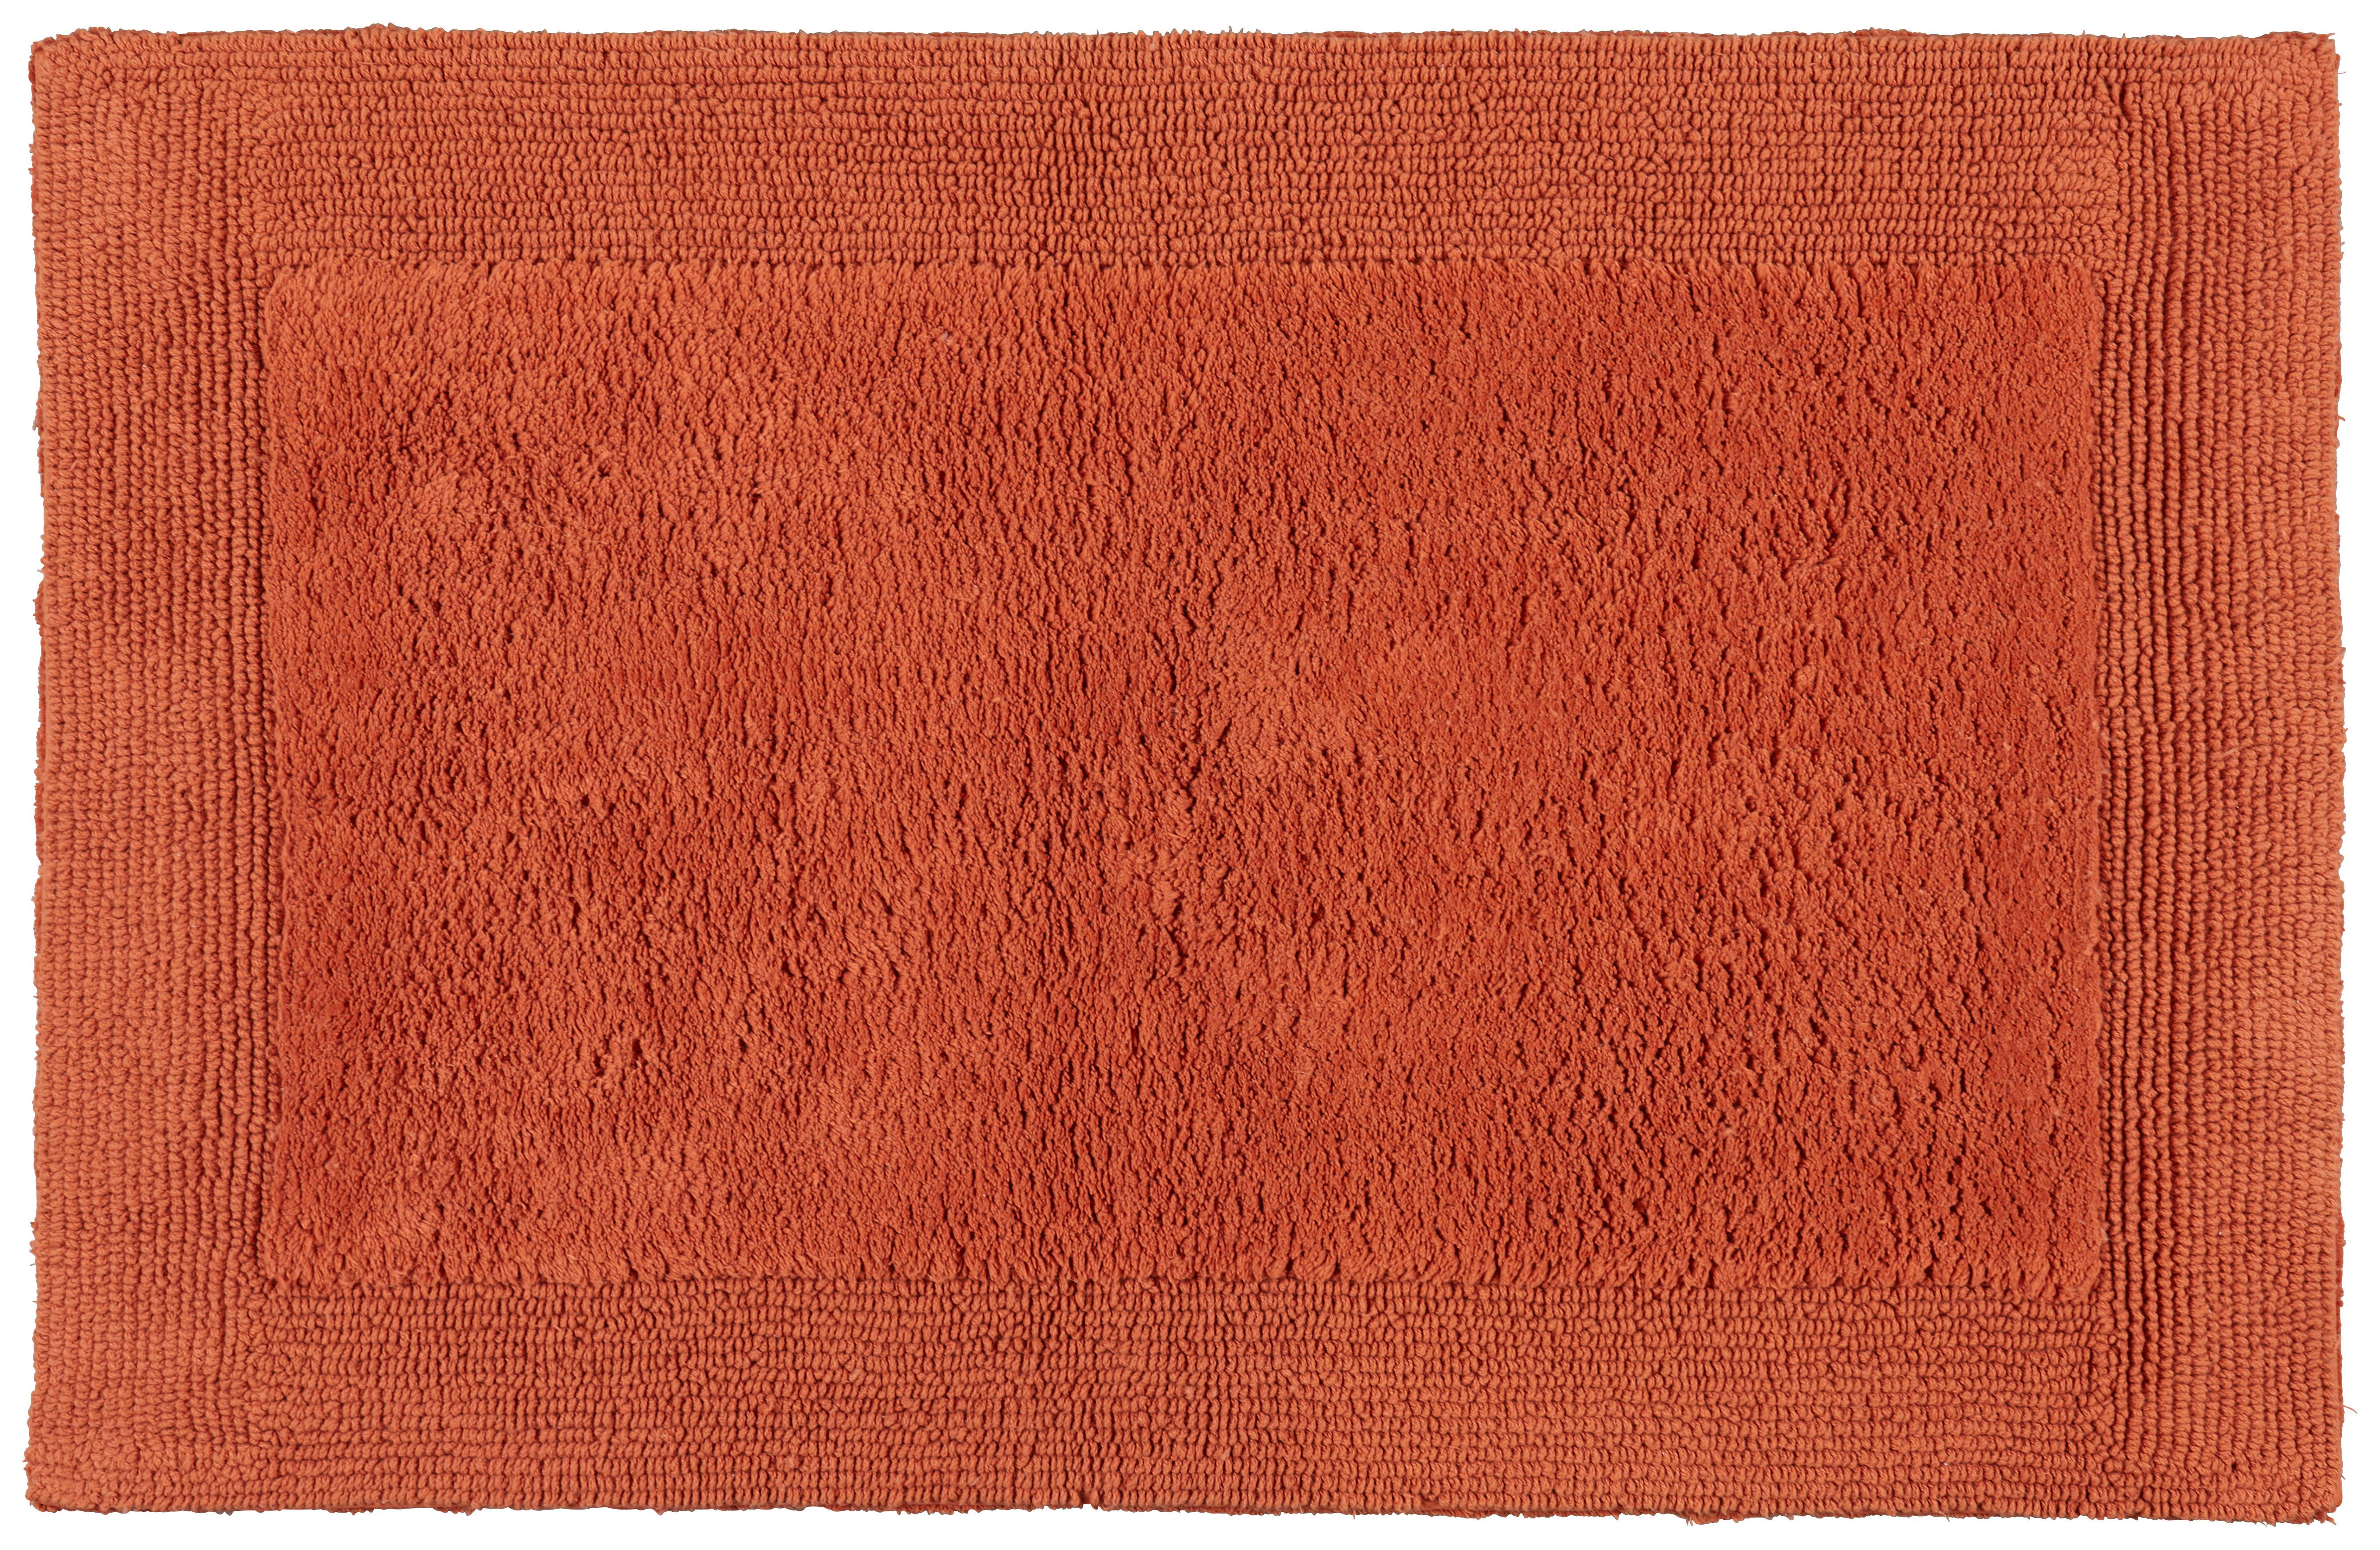 Badematte Karen in Orange ca. 60x100cm - Orange, KONVENTIONELL, Textil (60/100cm) - Premium Living